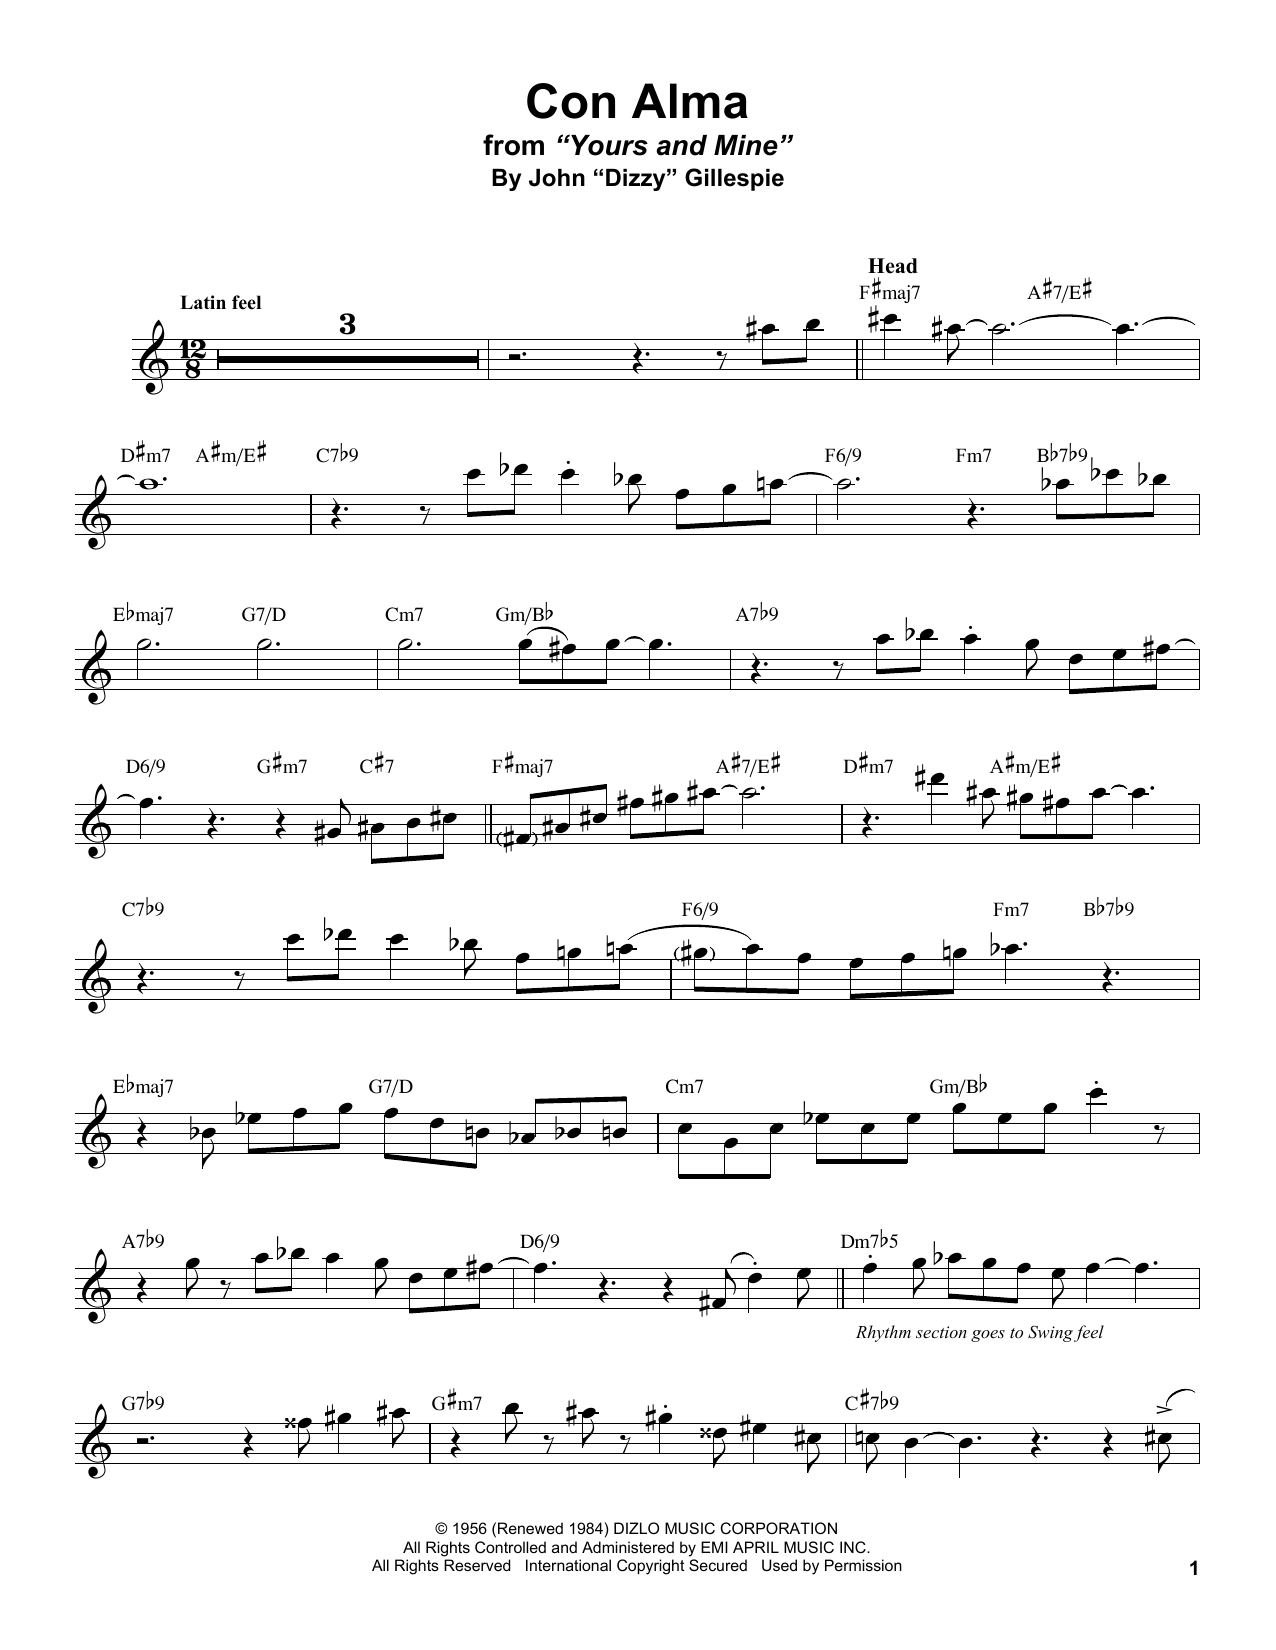 Stan Getz Con Alma Sheet Music Notes & Chords for Tenor Sax Transcription - Download or Print PDF